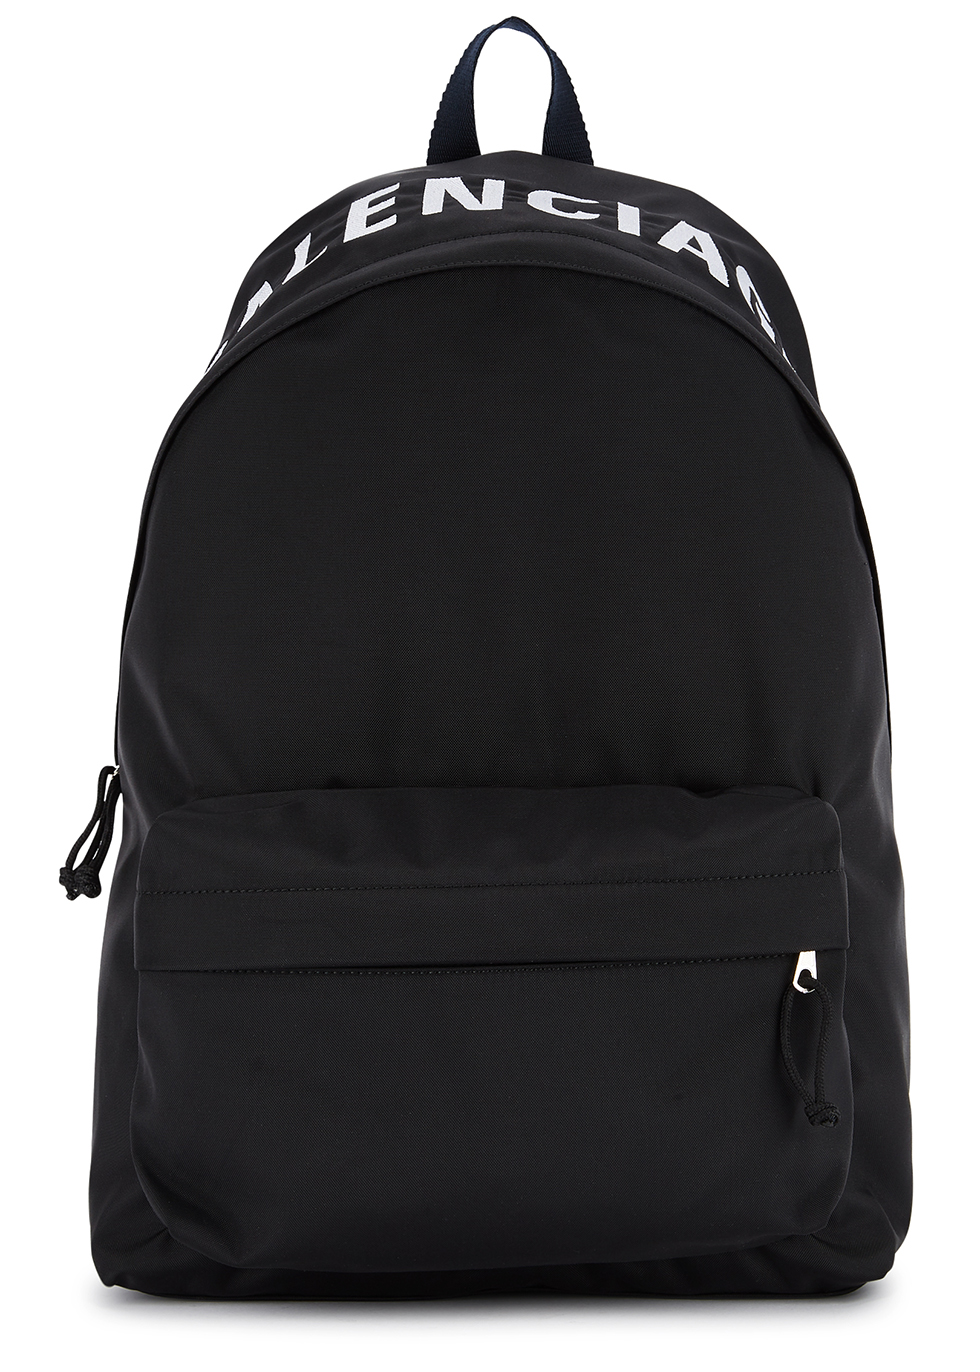 Balenciaga Wheel black logo nylon backpack - Harvey Nichols